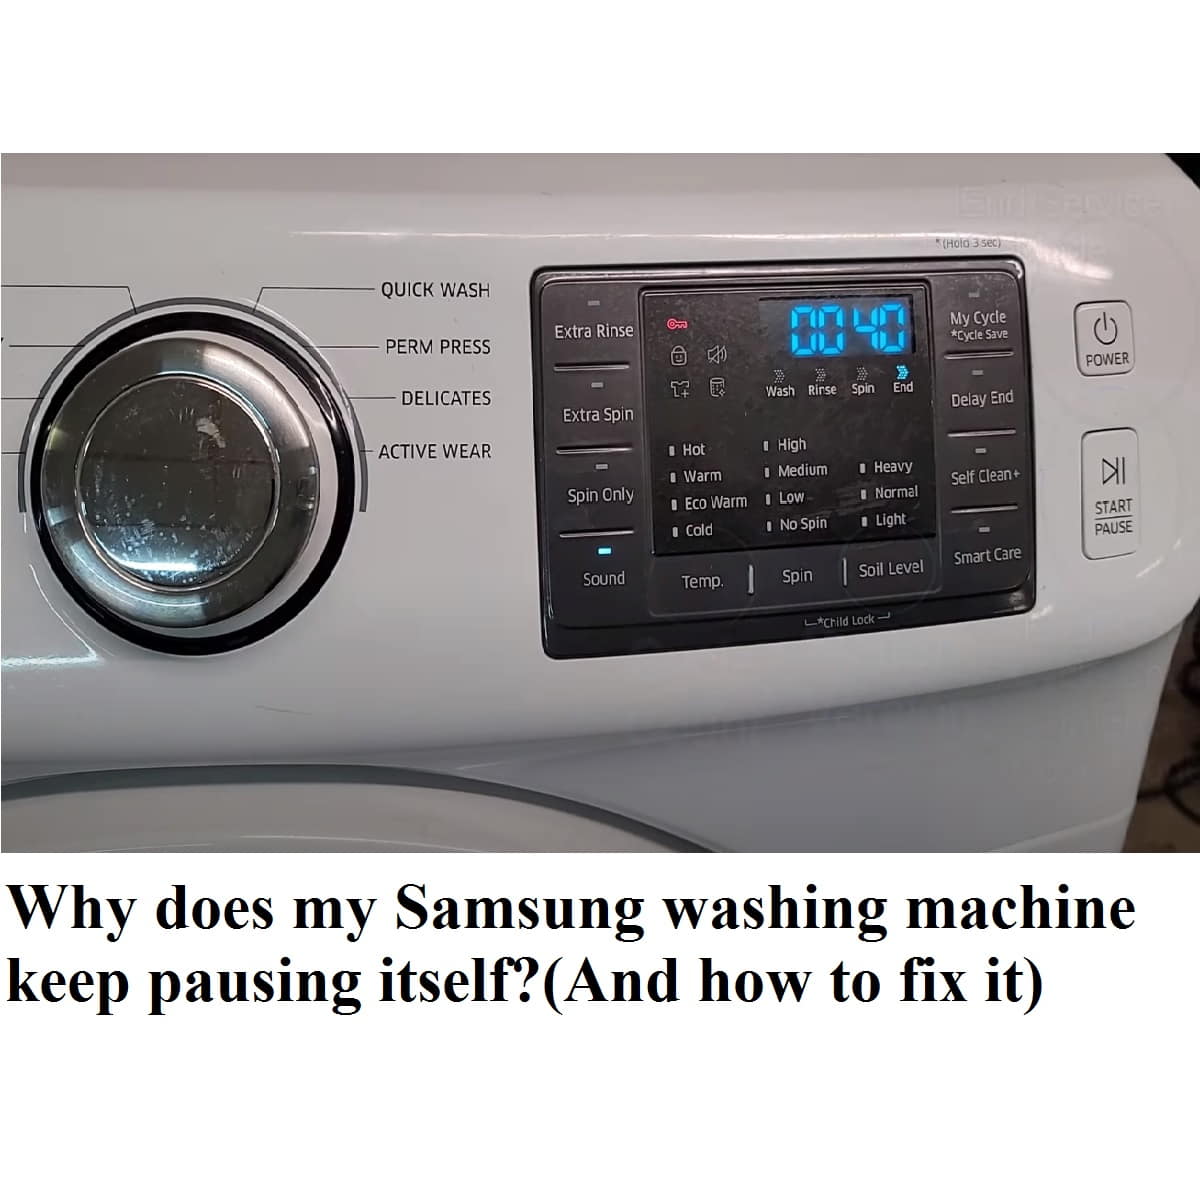 Why does my Samsung washing machine keep pausing itself